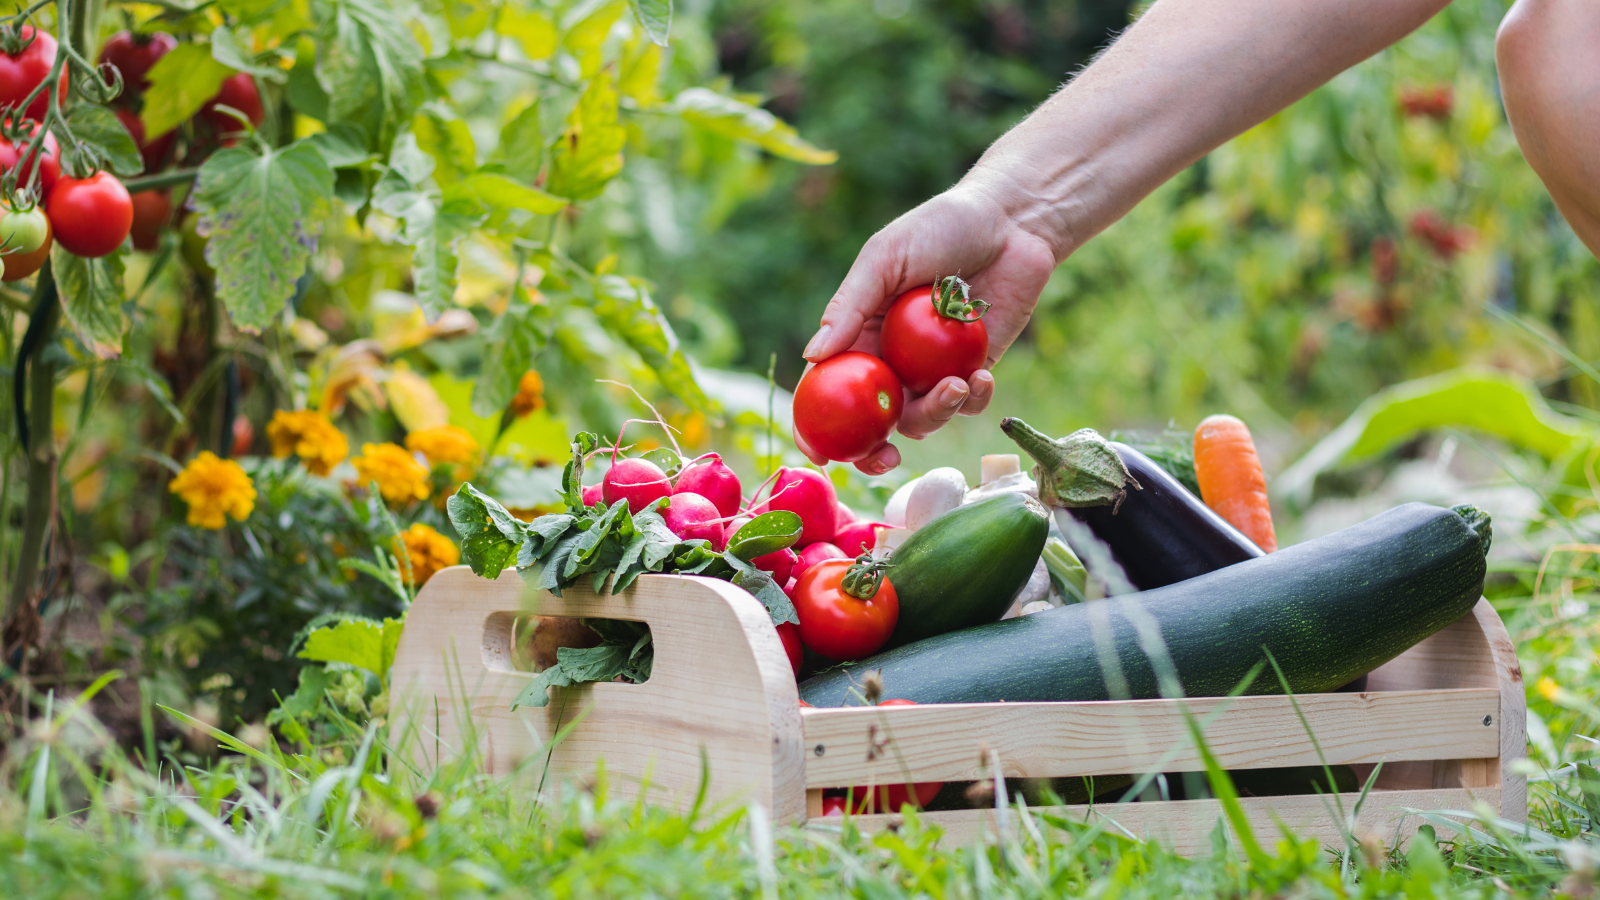 10 Steps for Starting an Organic Garden